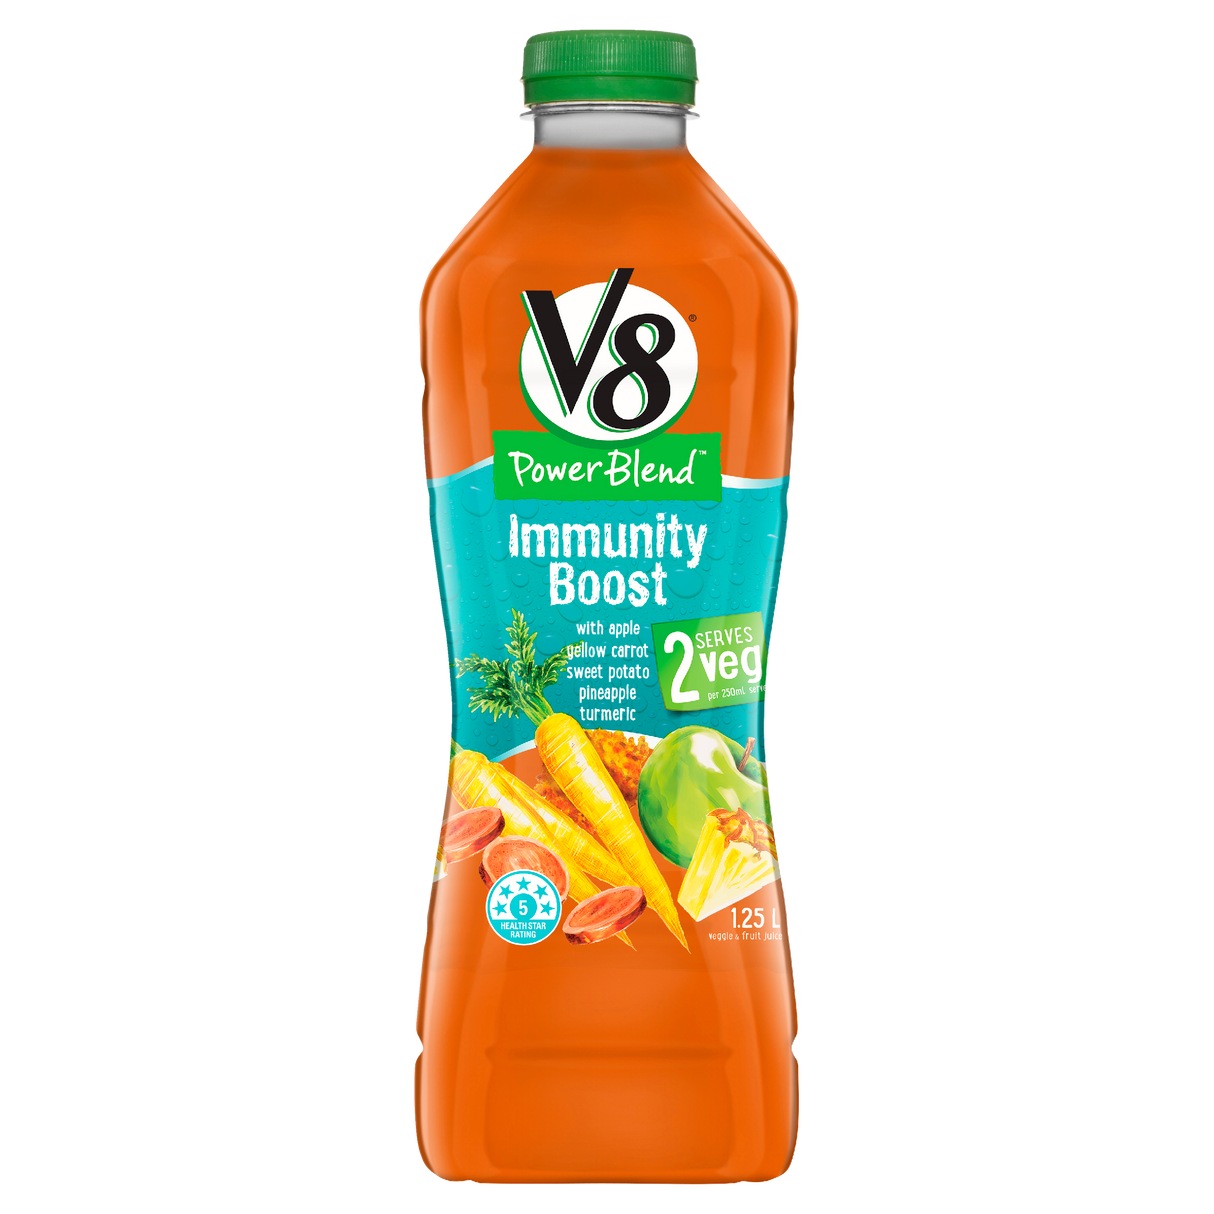 V8 Immunity Boost Power Blend Juice 1.25l